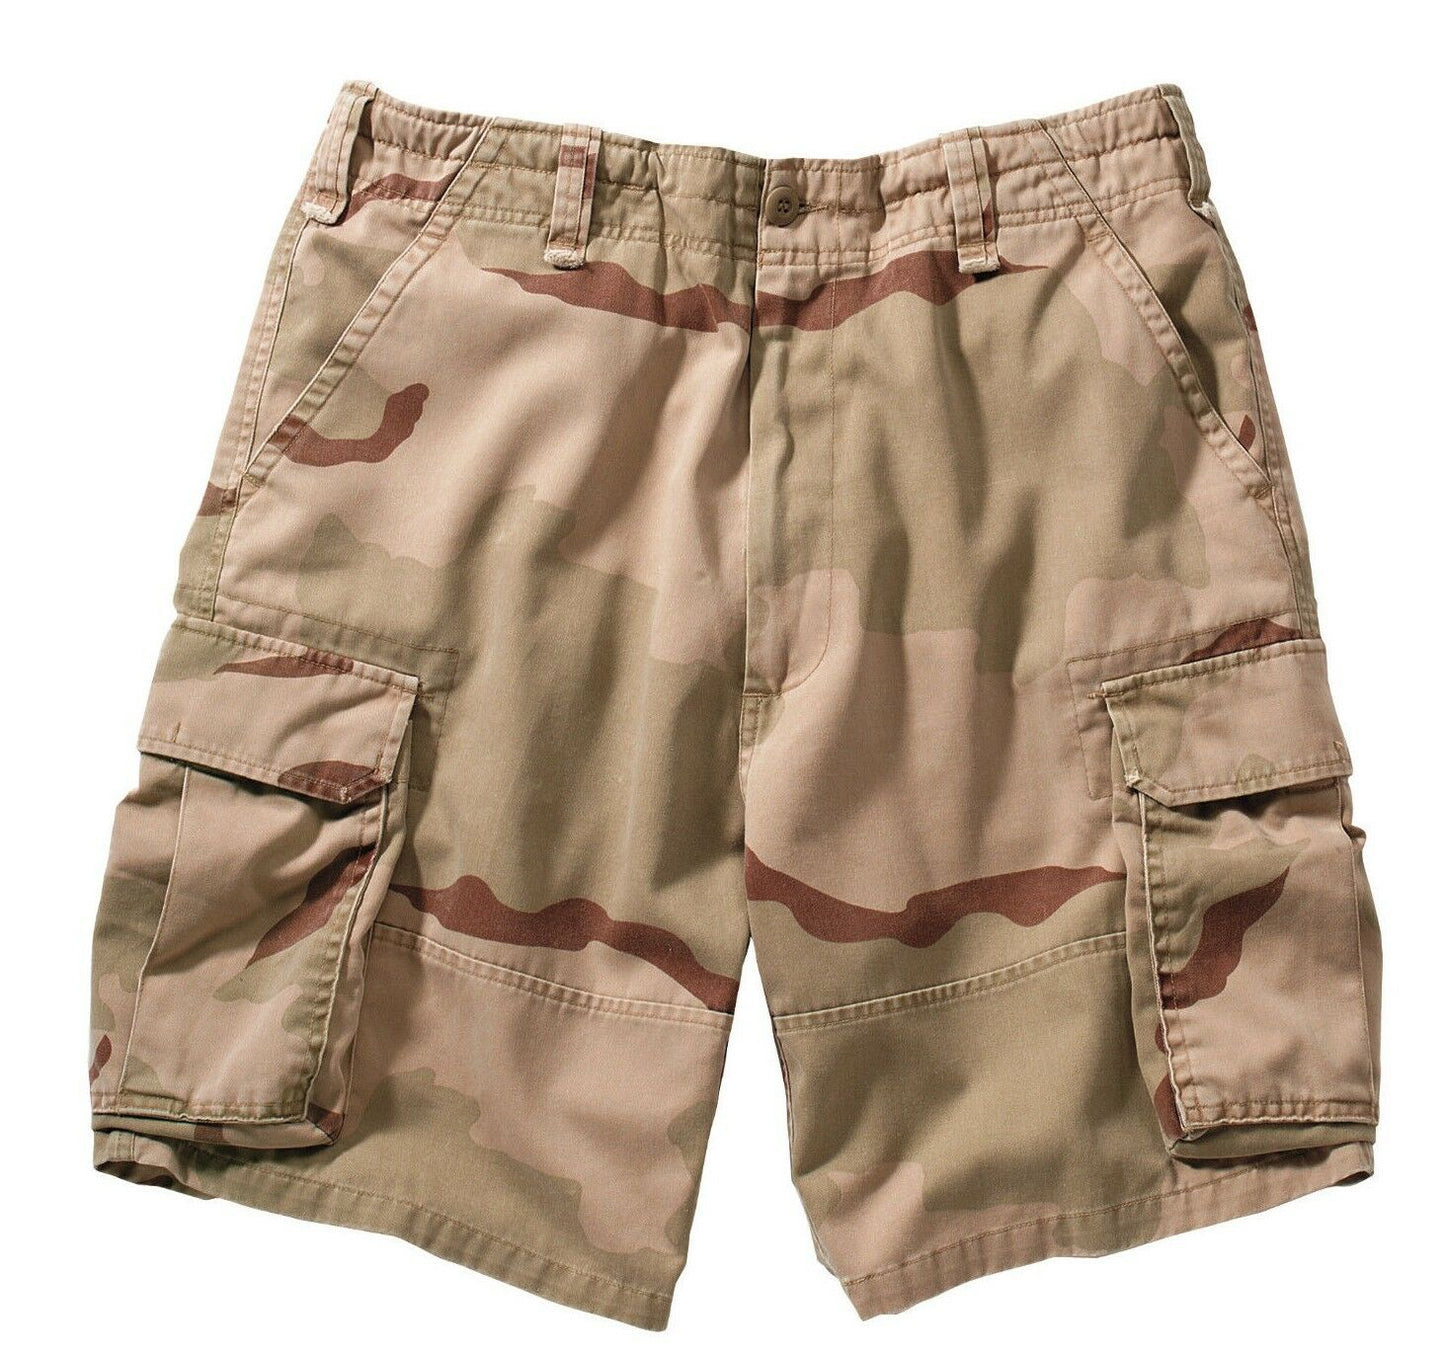 Rothco Vintage Camo Paratrooper Cargo Shorts - Tri Color Desert Camo